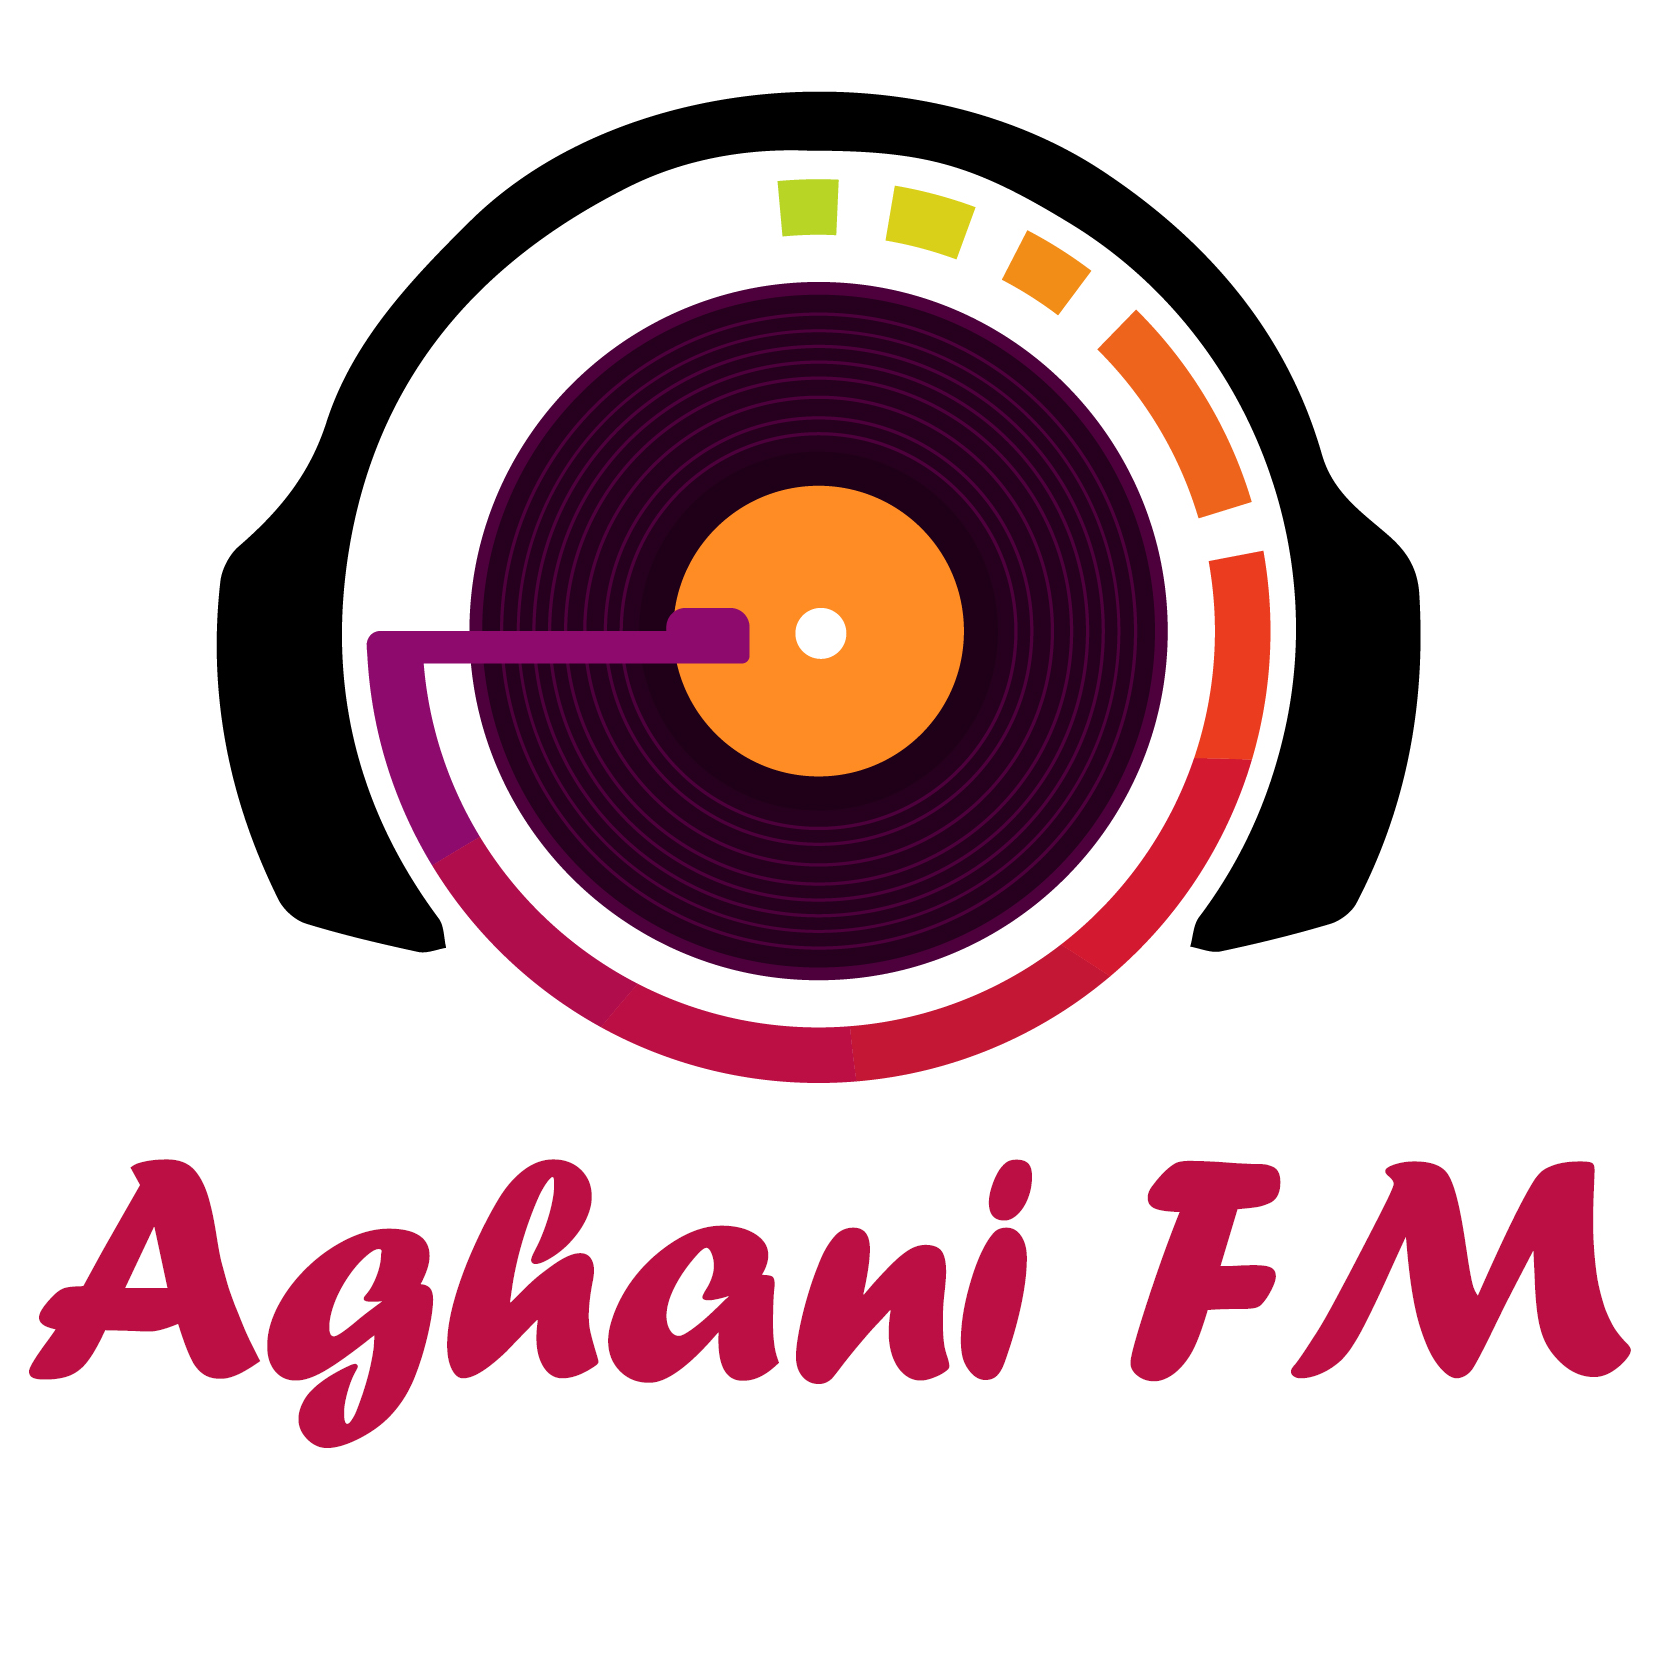 Aghani FM